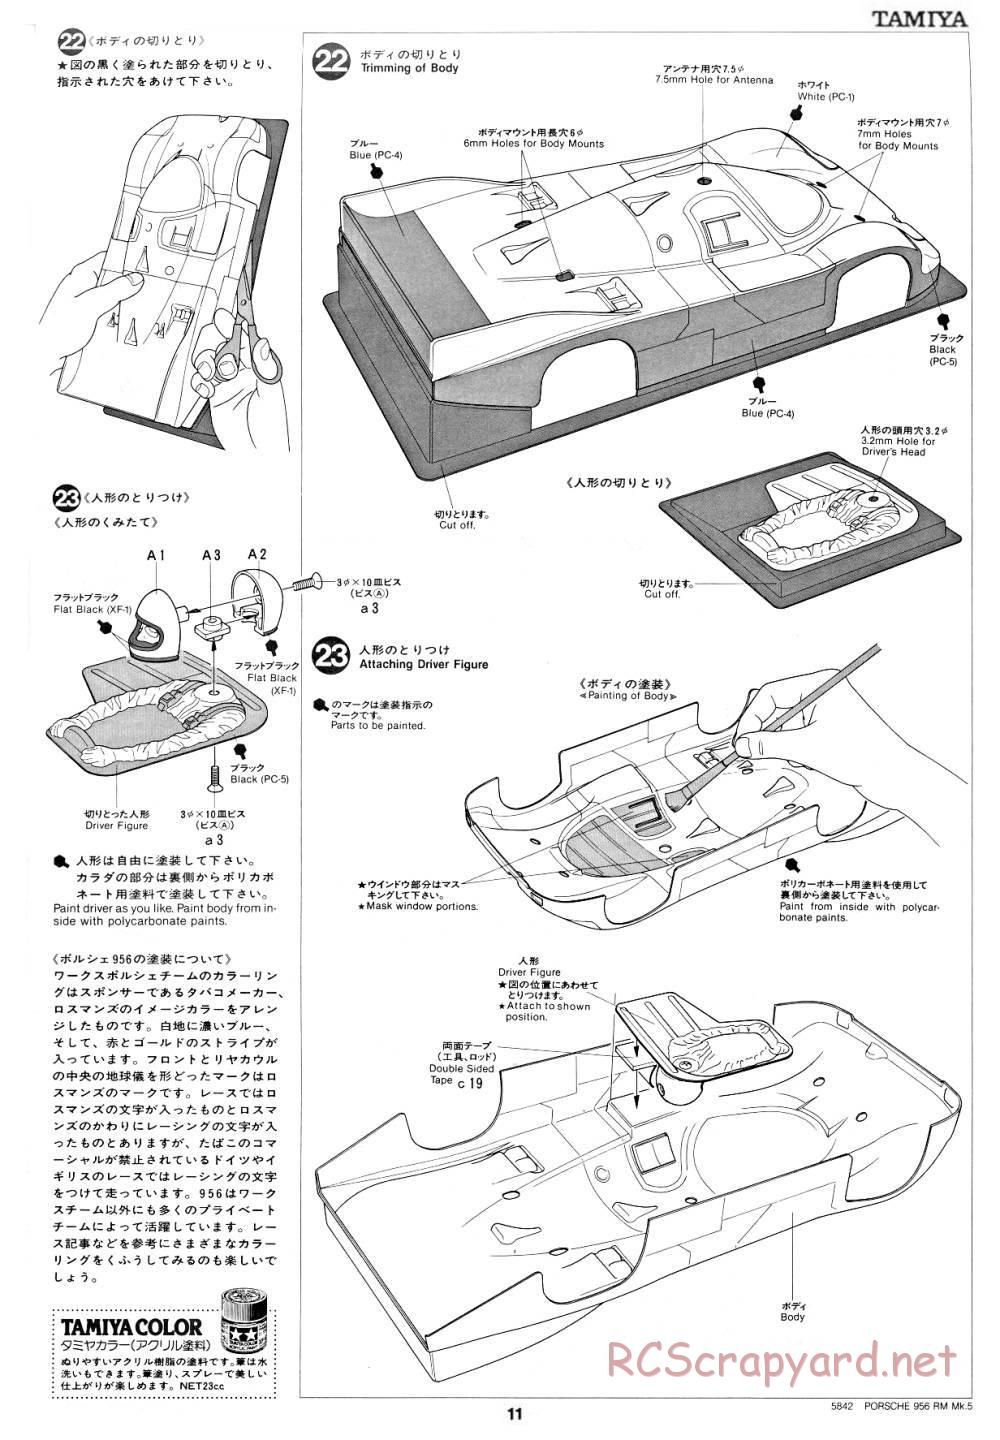 Tamiya - Porsche 956 - RM MK.5 - 58042 - Manual - Page 11